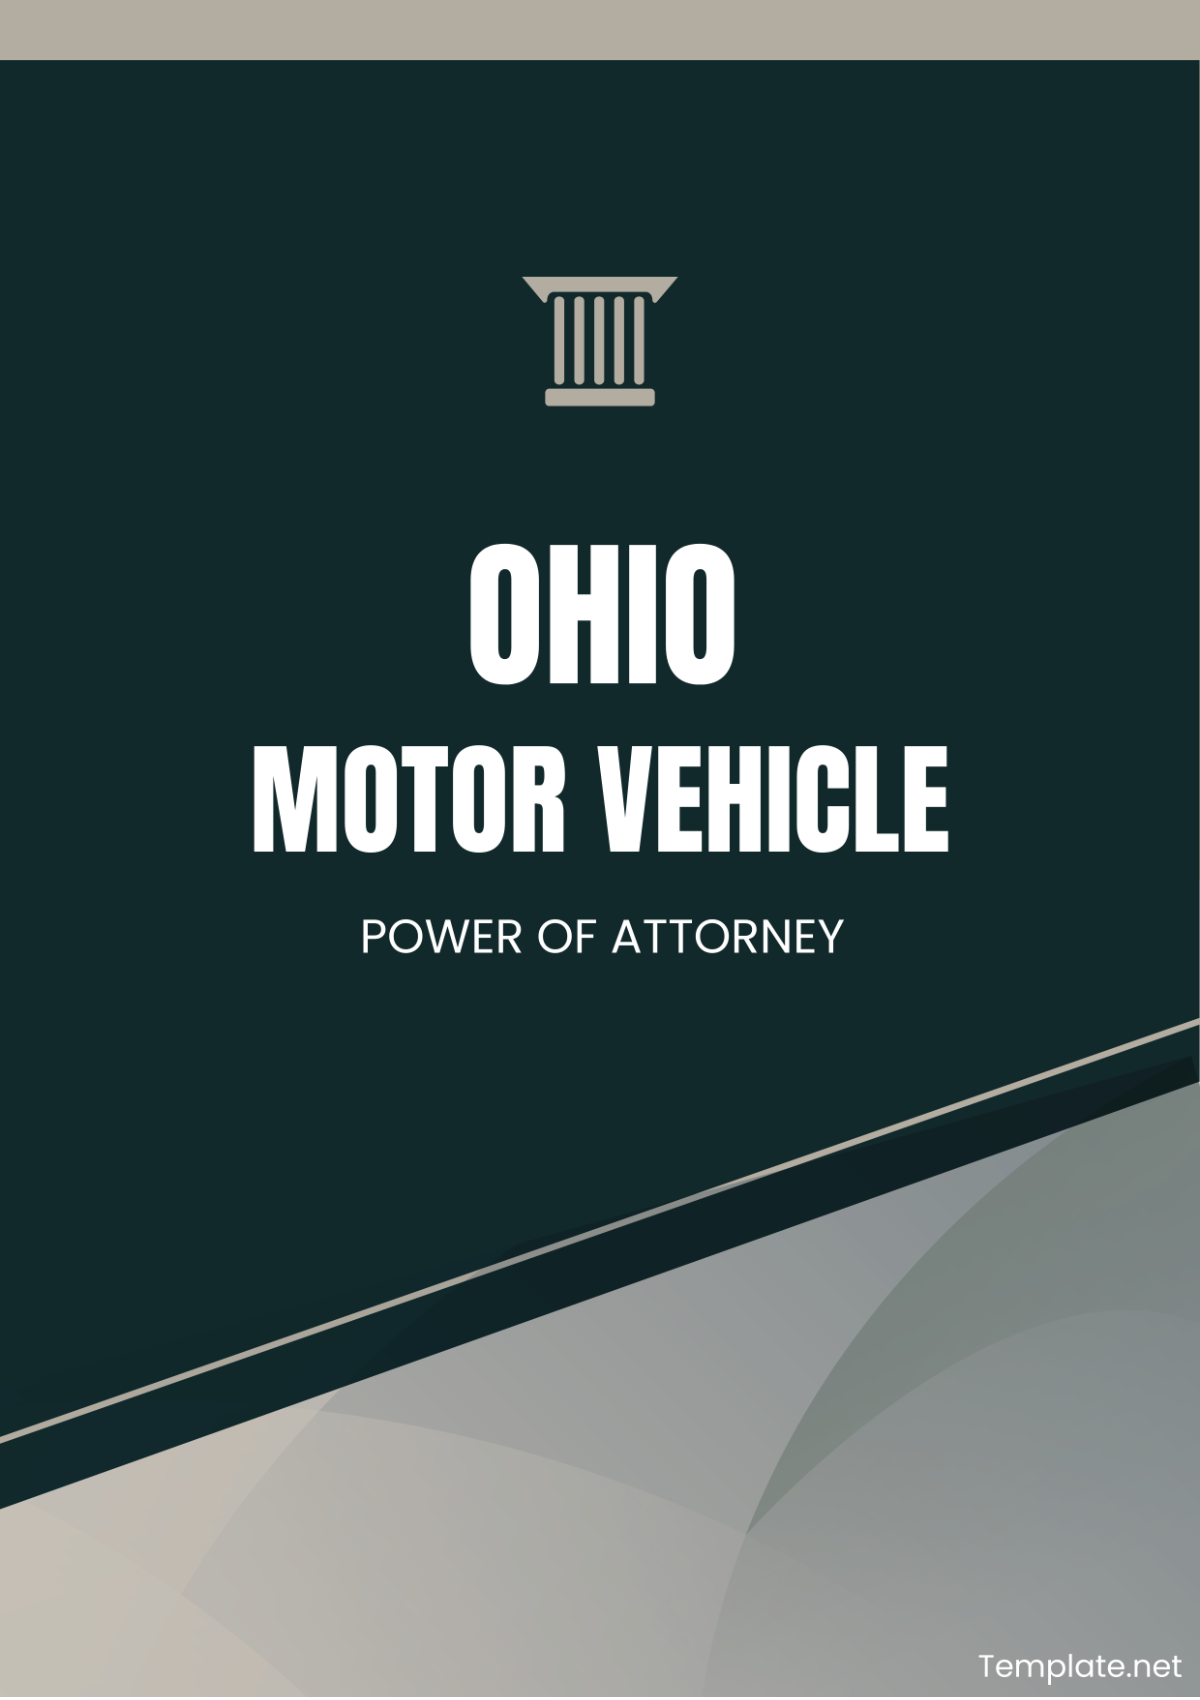 Ohio Motor Vehicle Power of Attorney Template